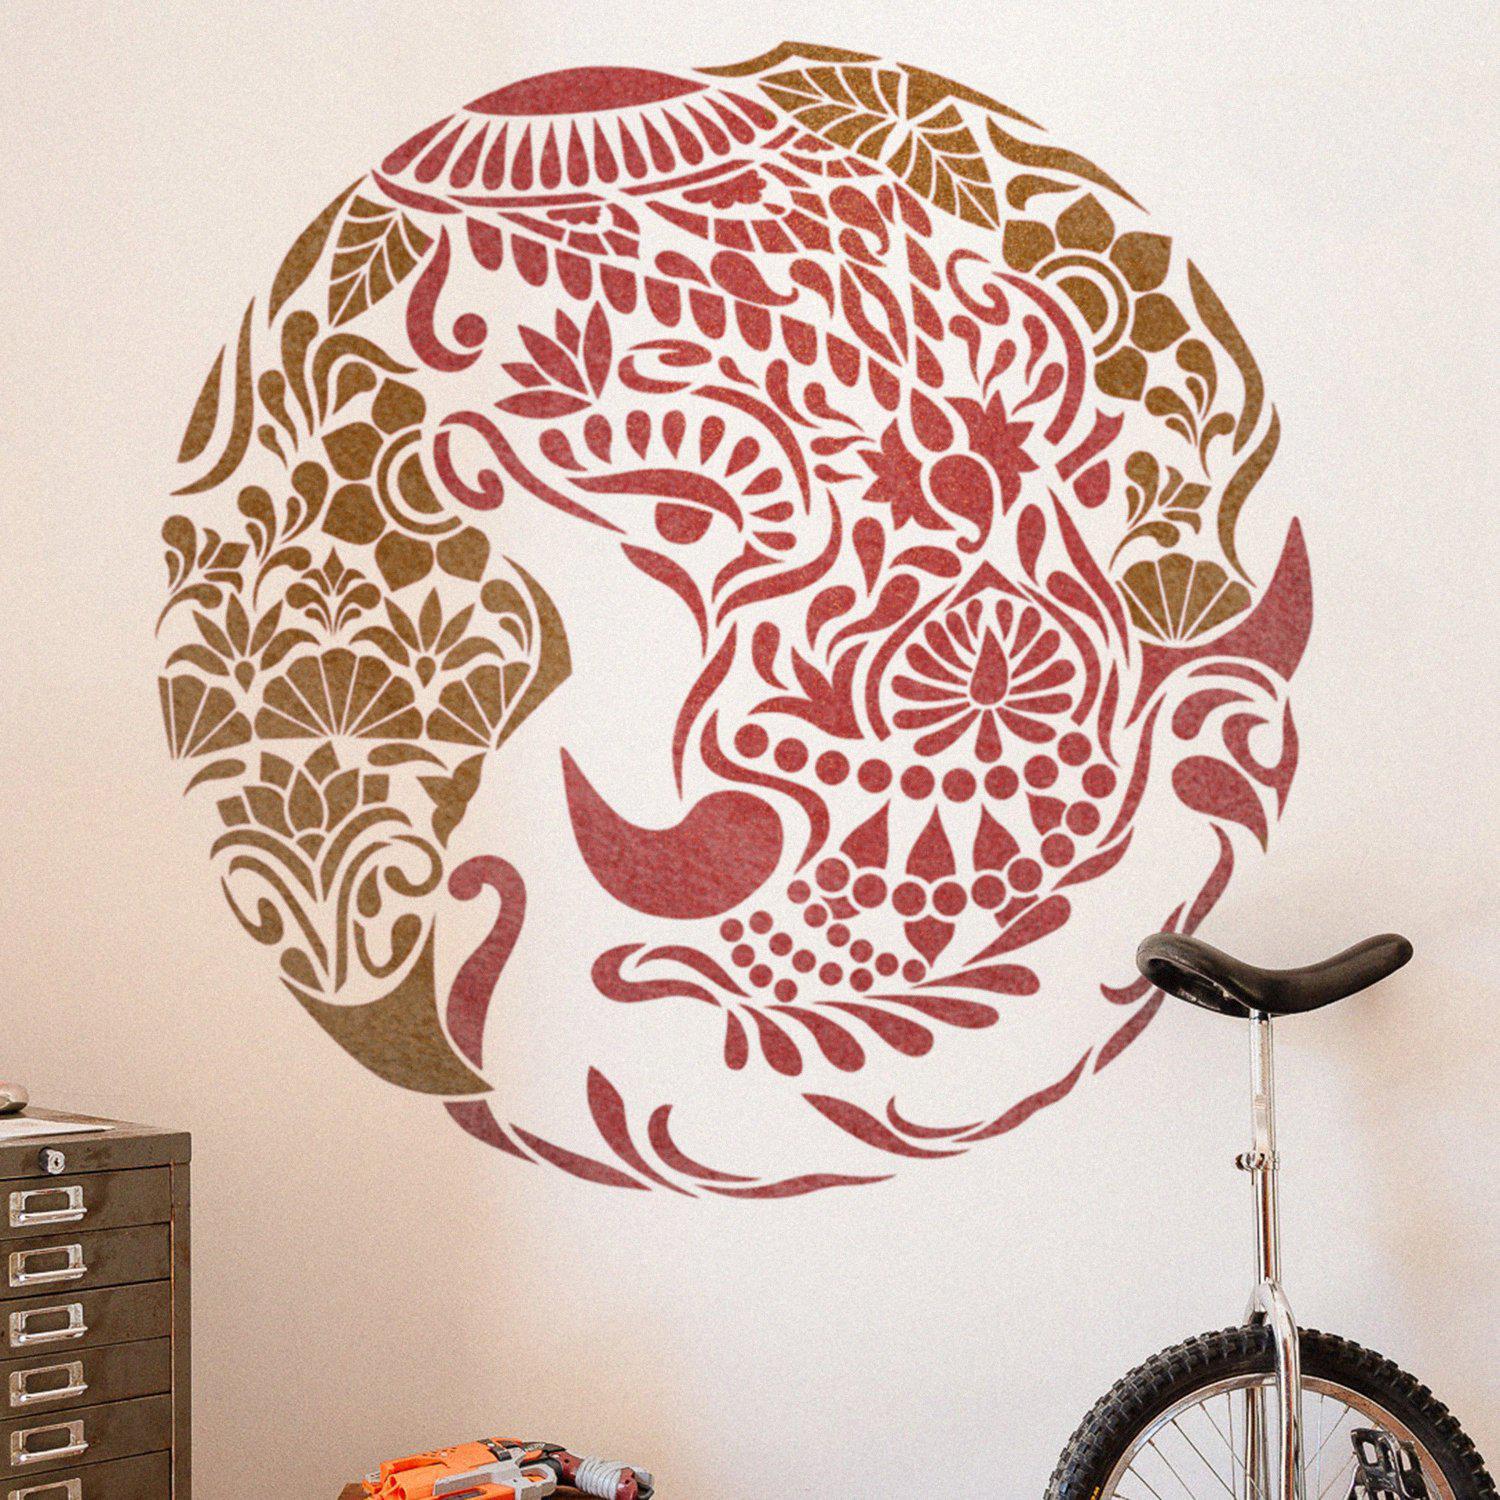 Floral Mandala Stencil - Art and Wall Stencils - Stencil Giant